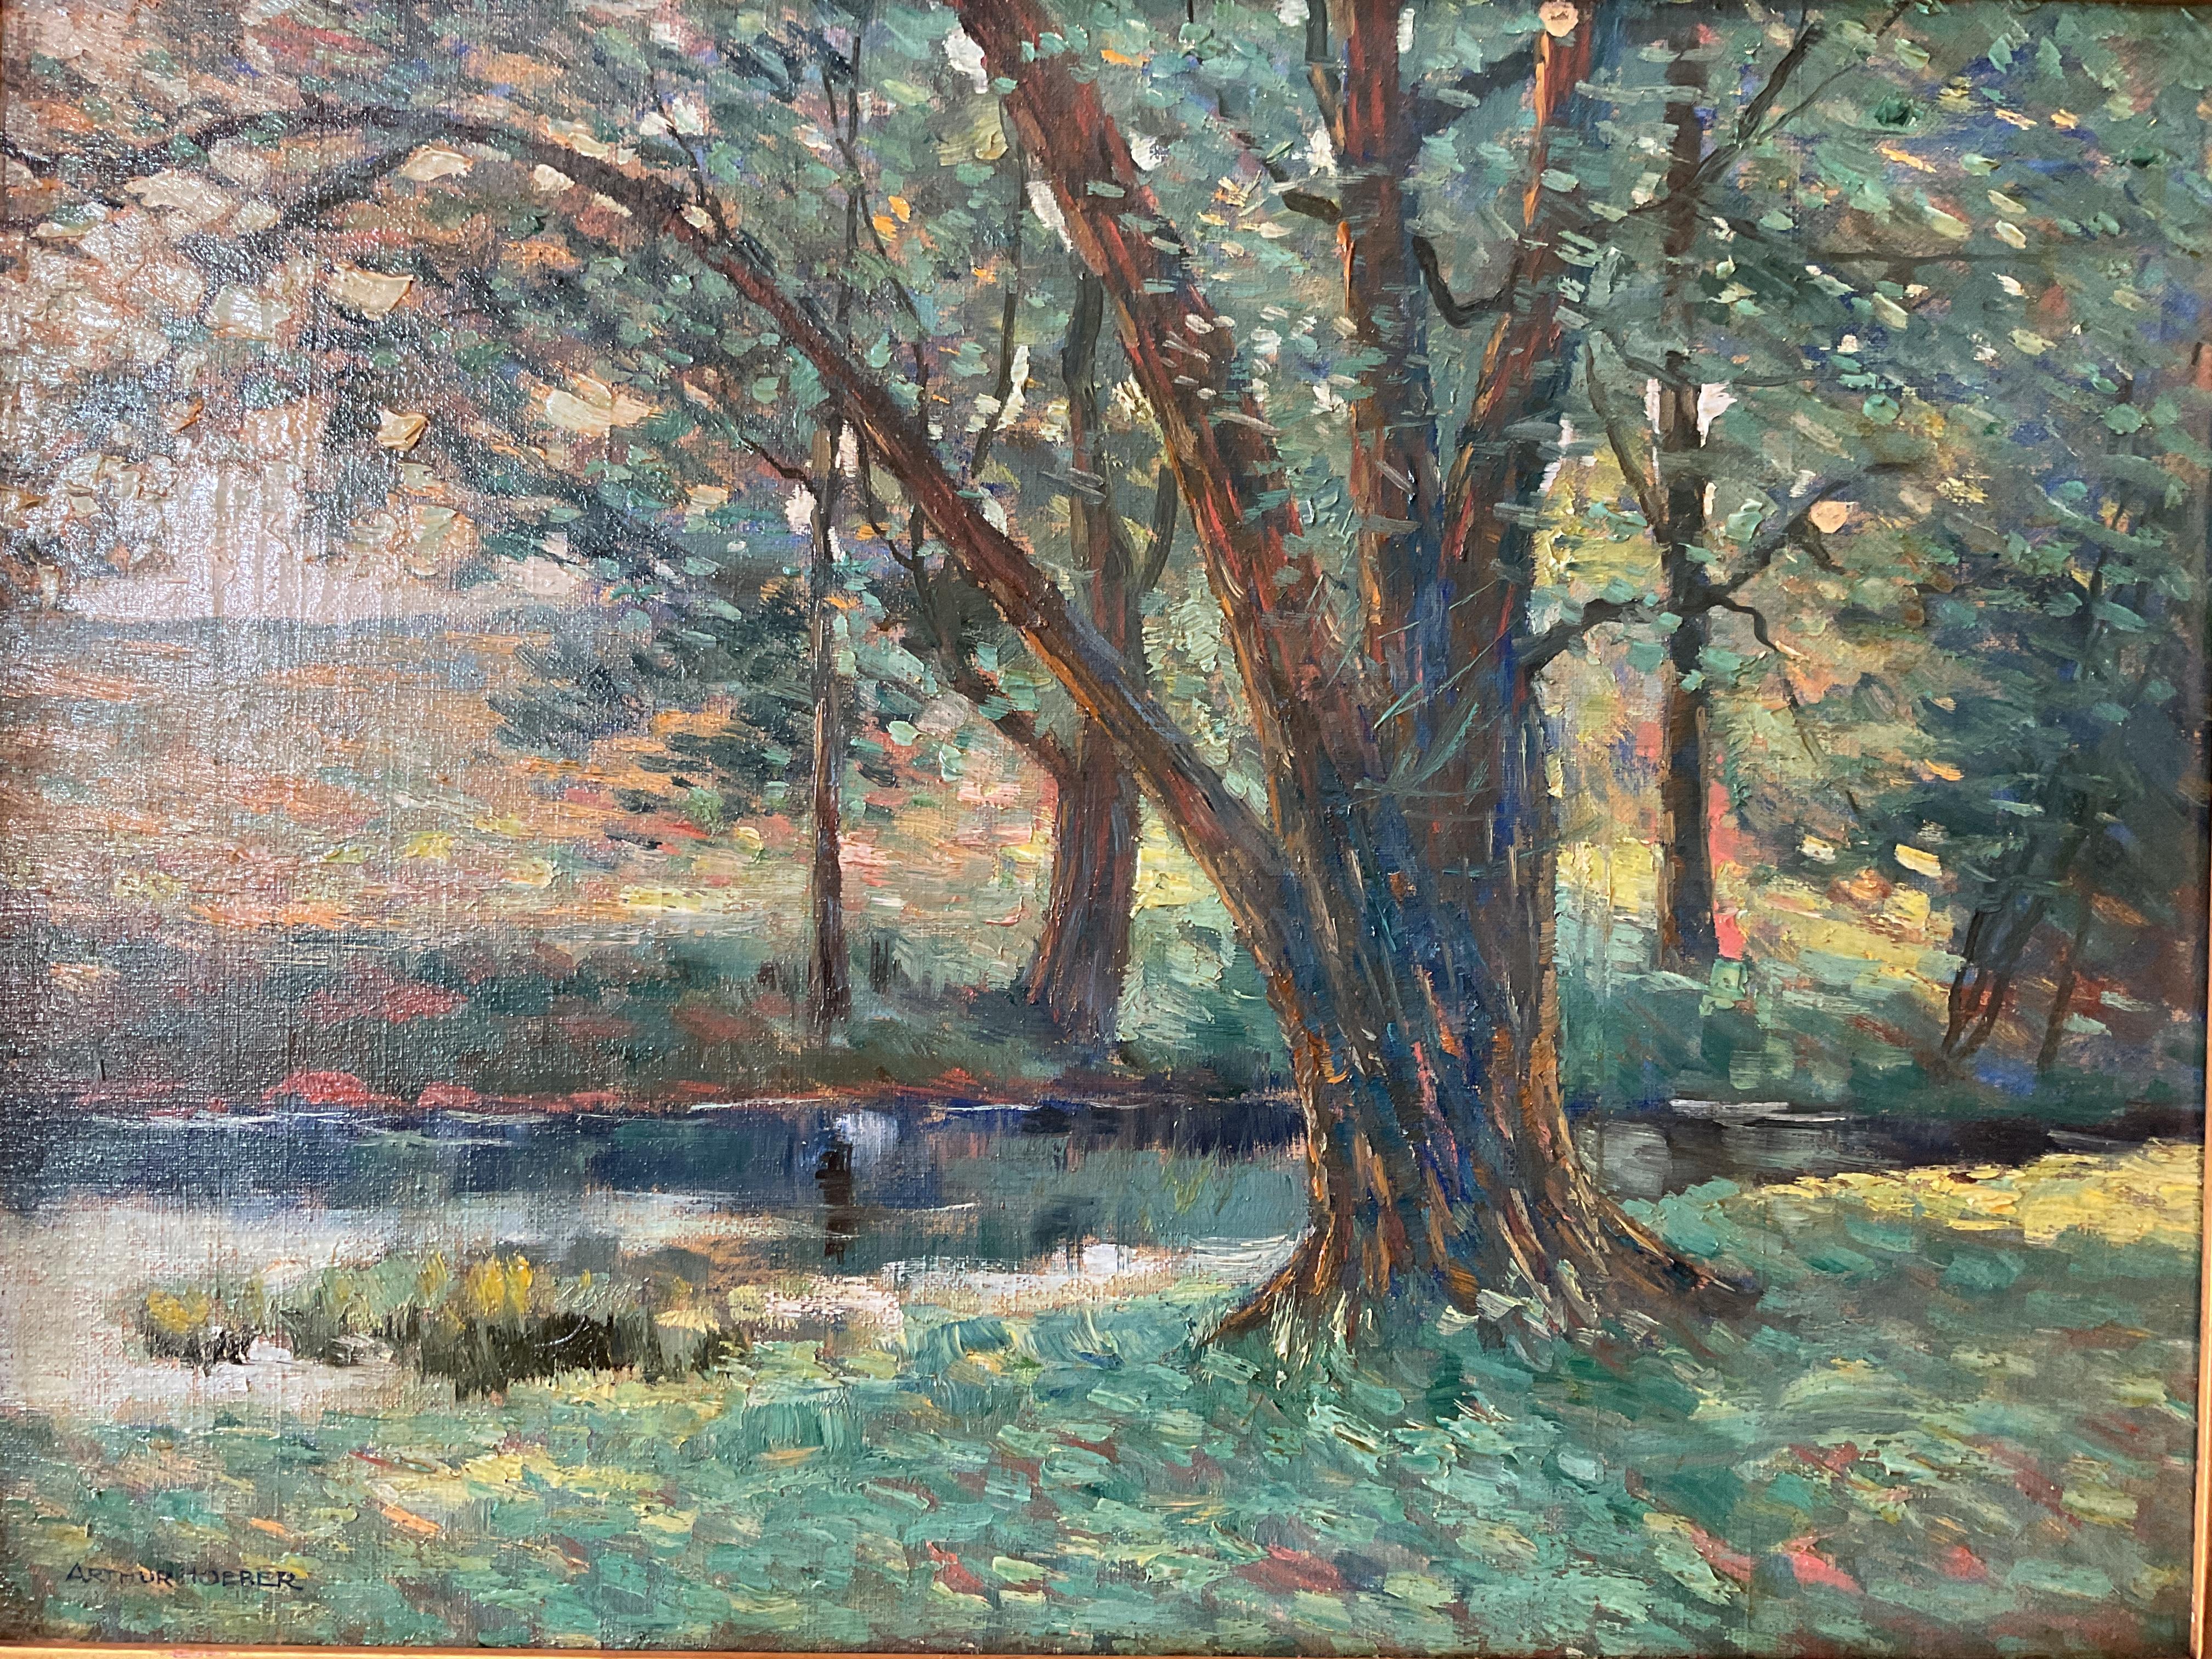 Antique American Impressionist Landscape Painting - “Willow” by Arthur Hoeber For Sale 1